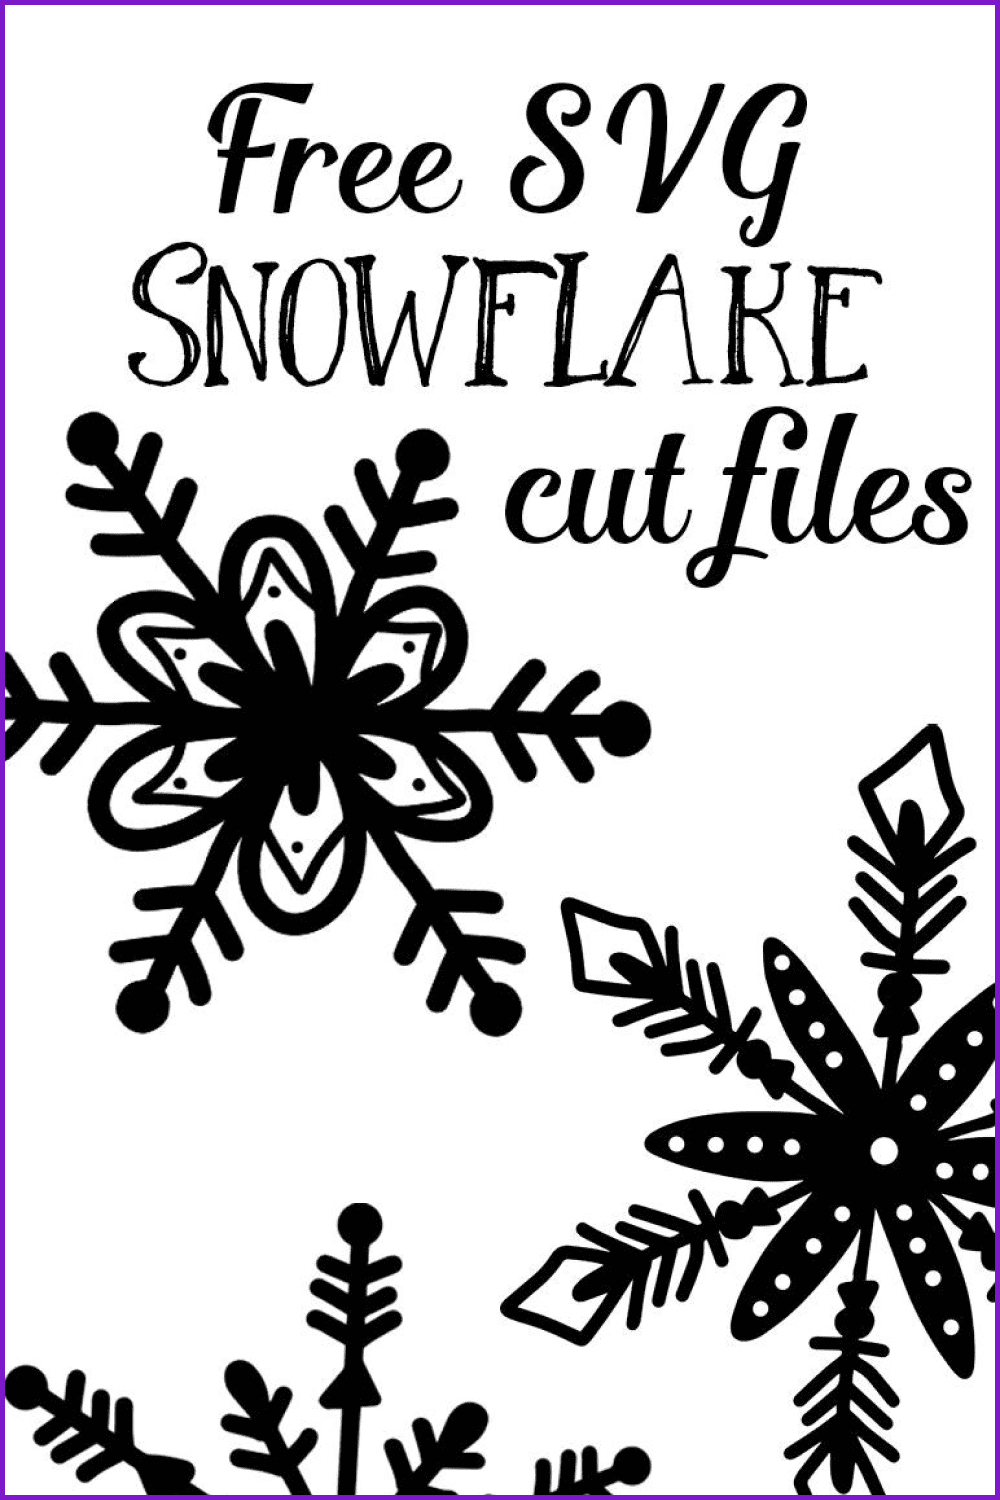 Free SVG Snowflake Cut Files.